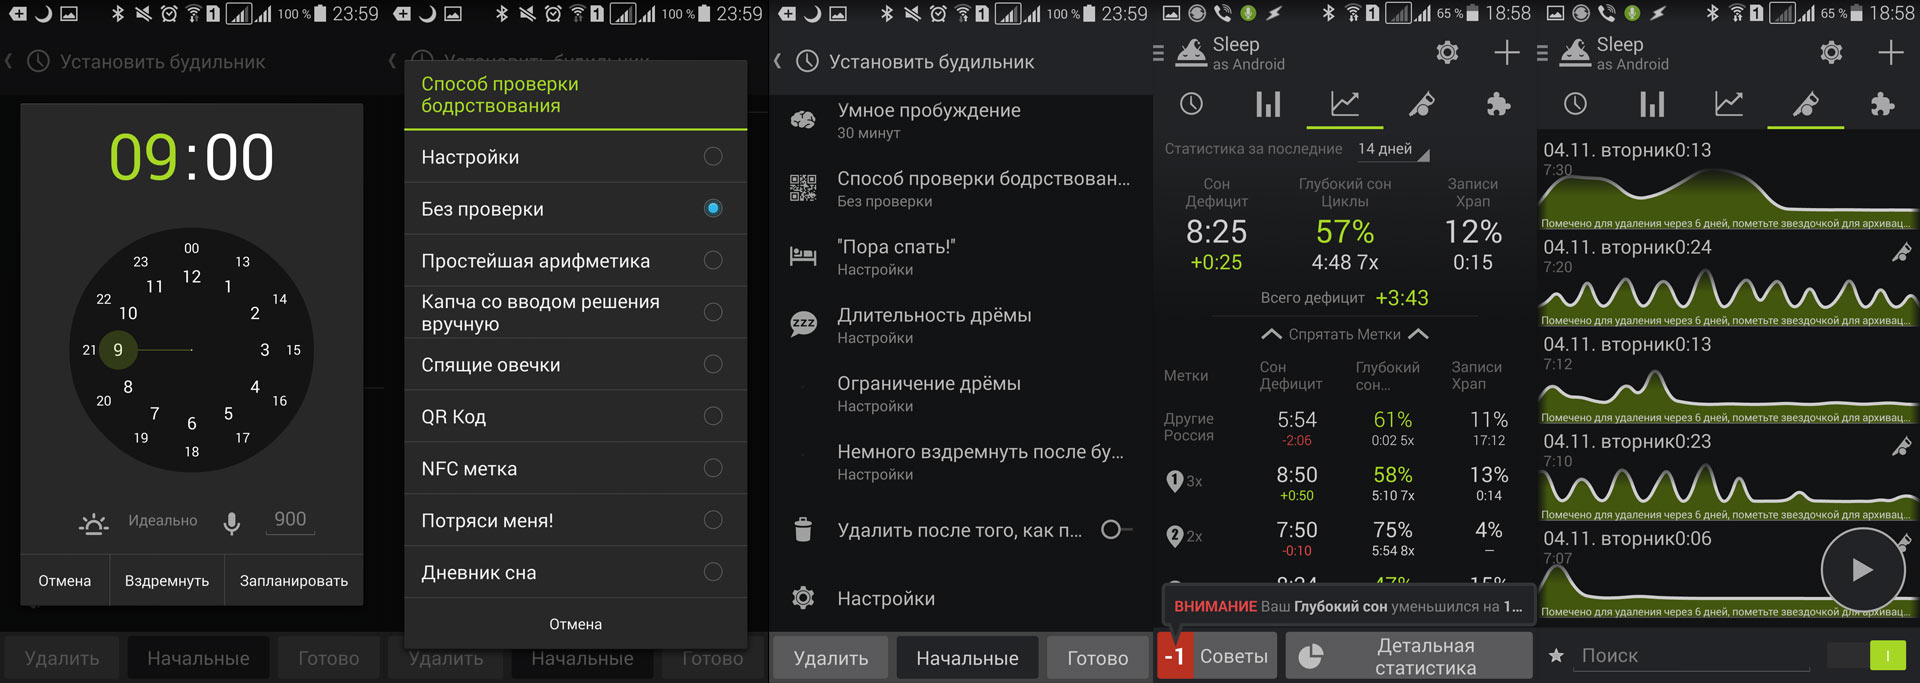 Интерфейс и настройки Sleep as Android